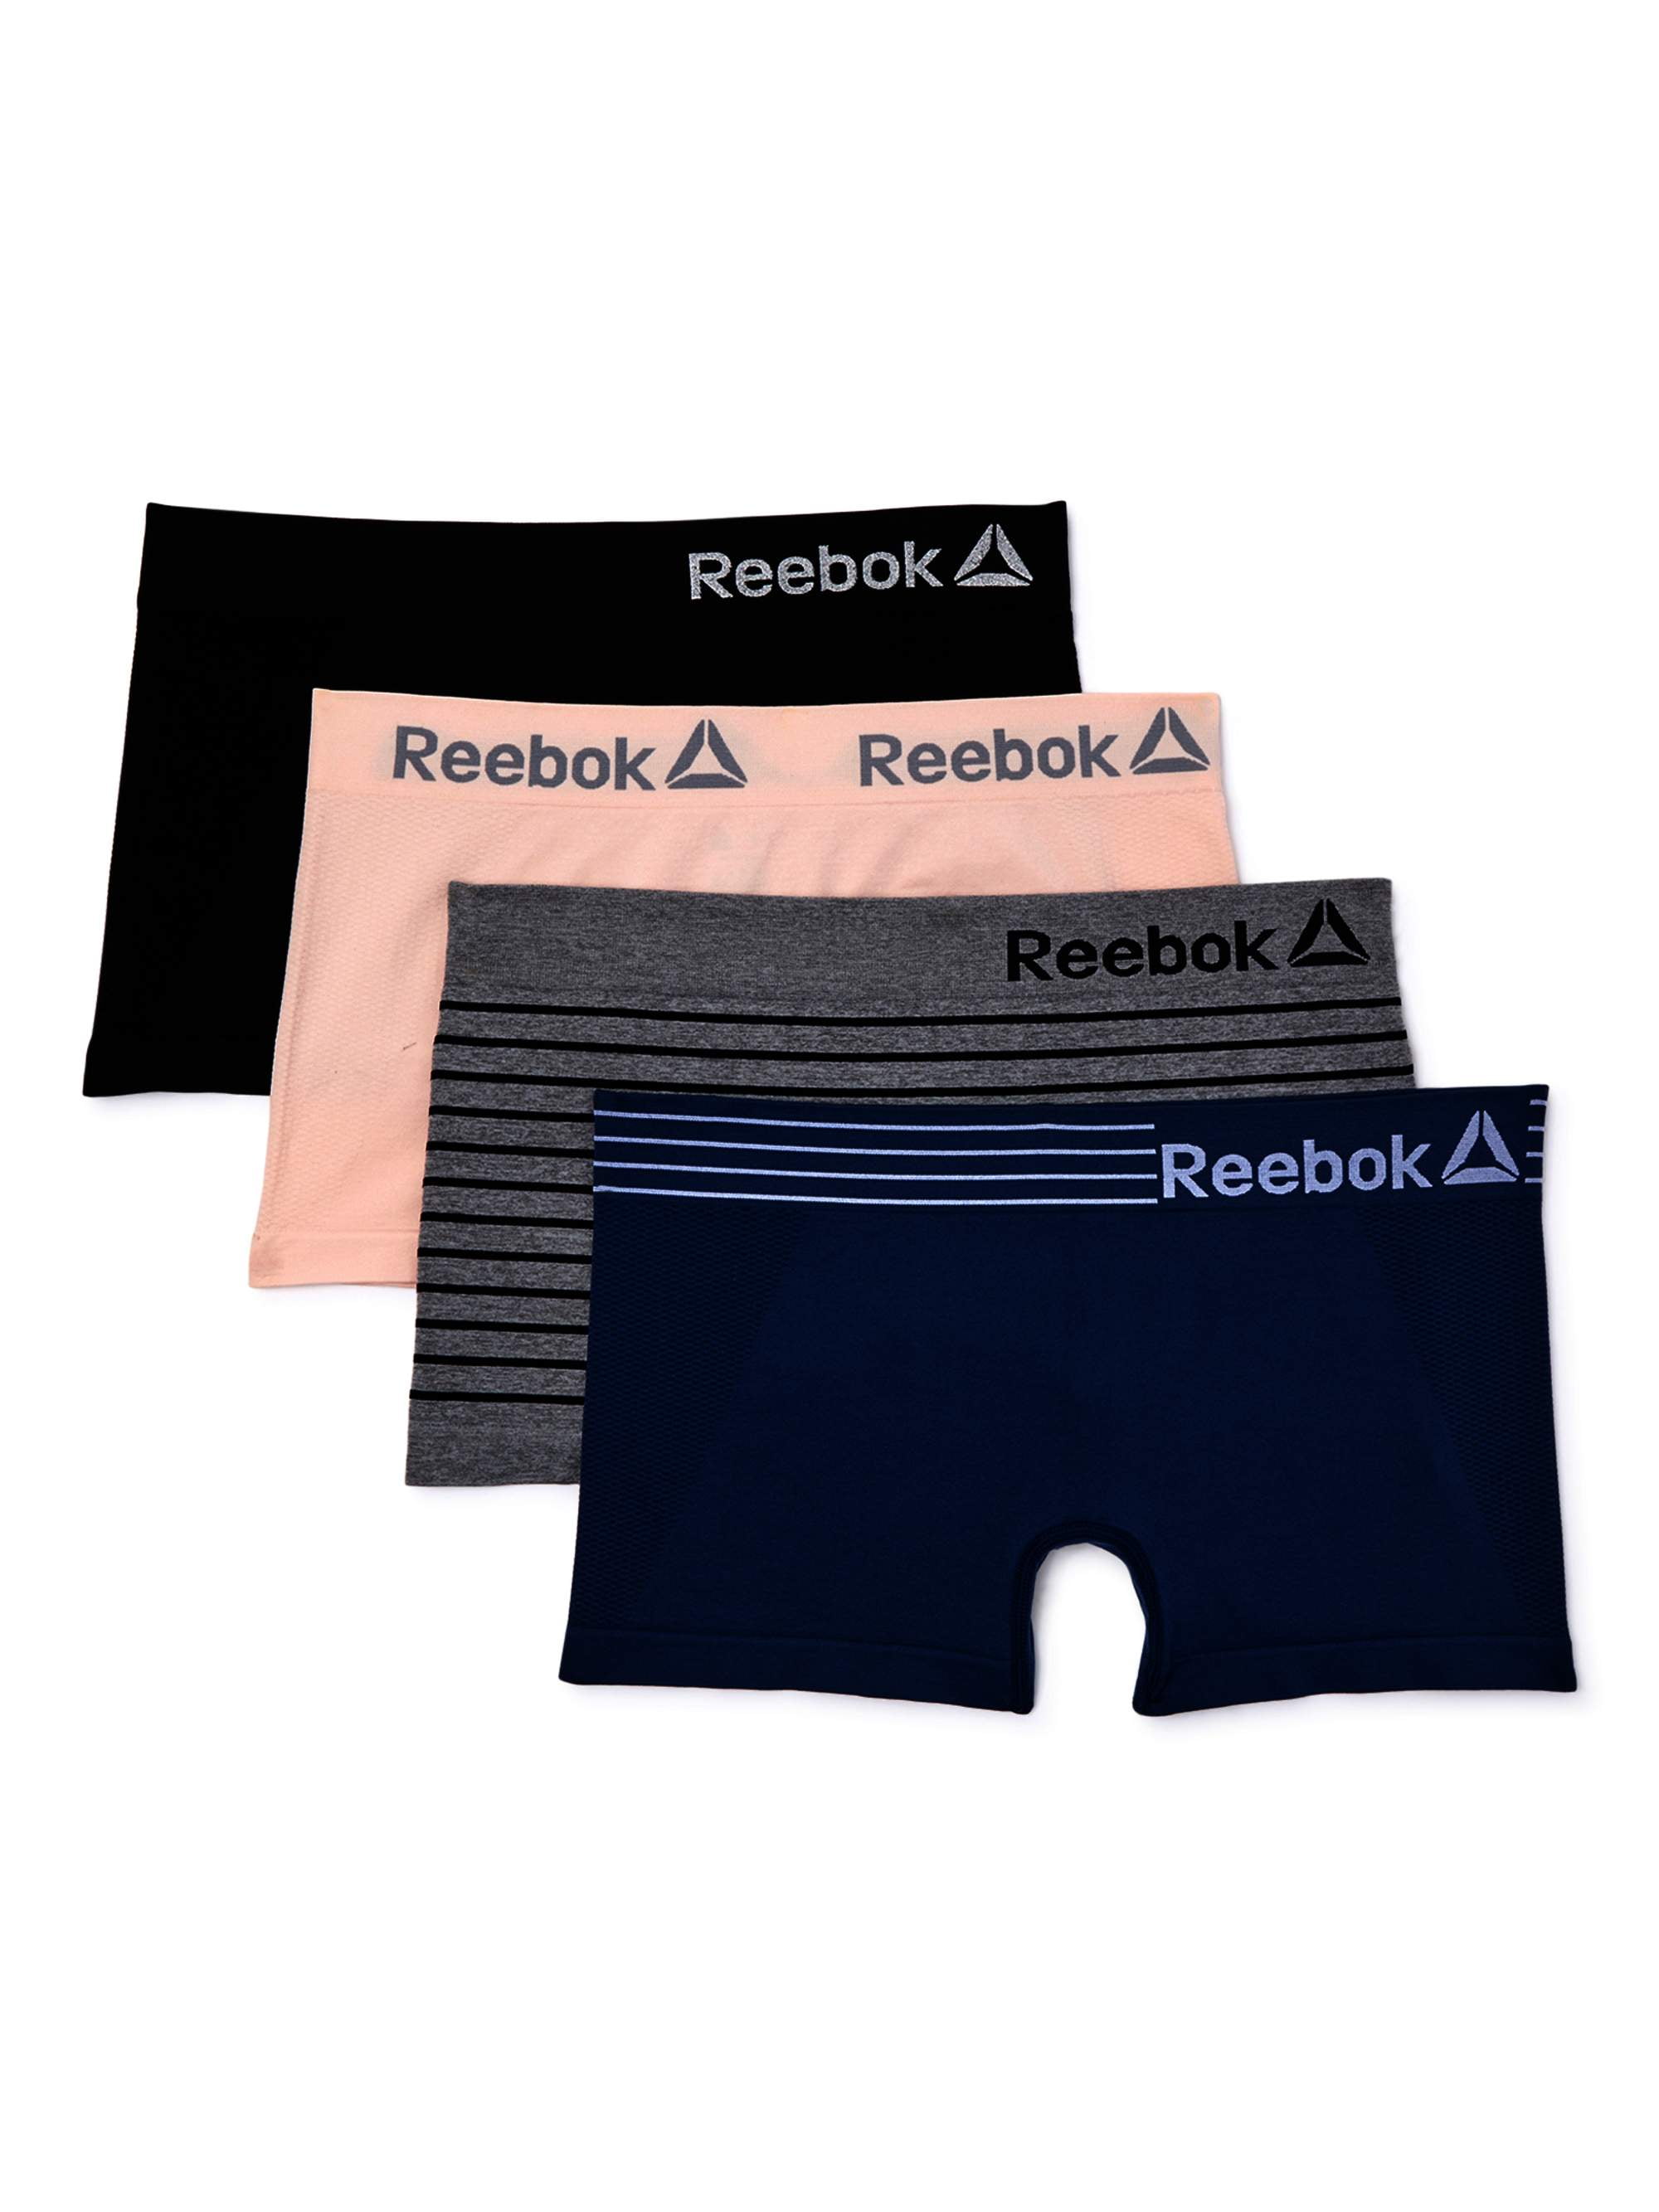 4 Pack Reebok Women/’s Underwear Performance Seamless Boyshorts